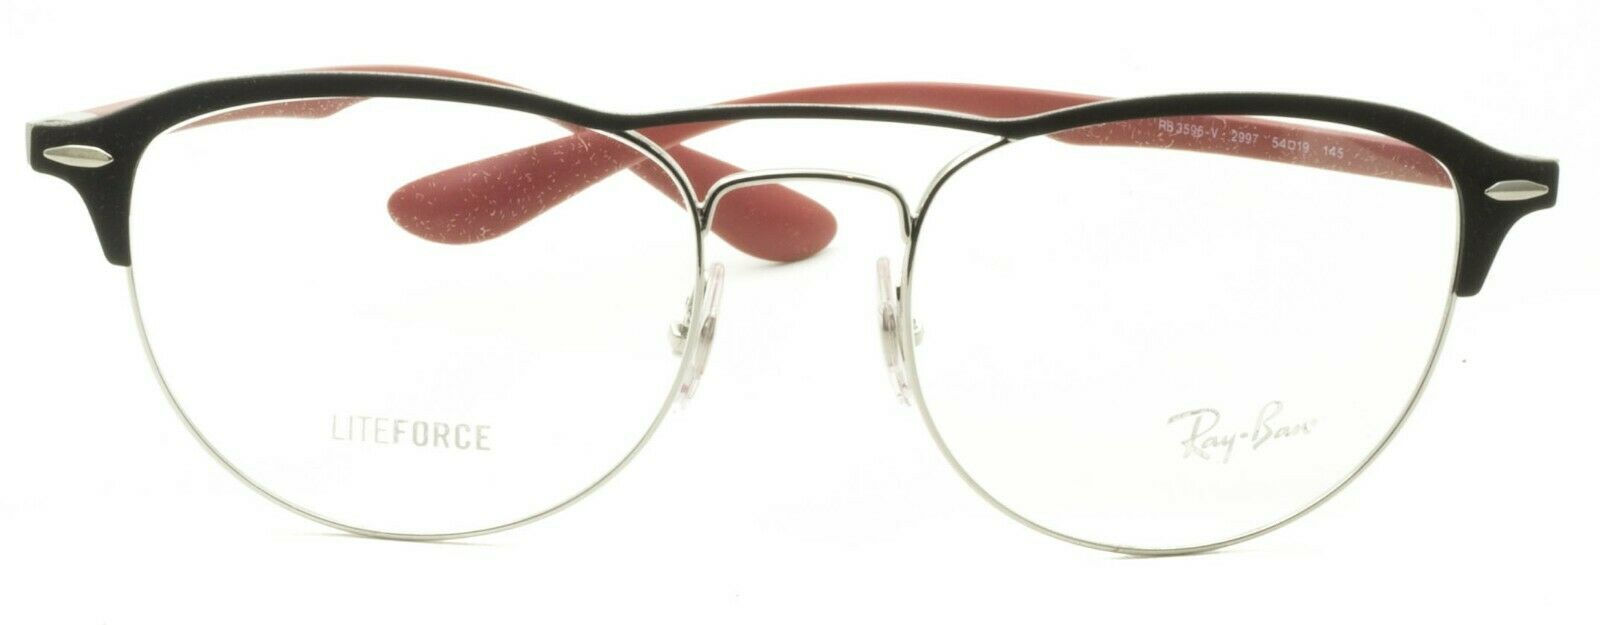 RAY BAN LITEFORCE RB 3596-V 2997 54mm FRAMES RAYBAN Glasses Eyewear RX Optical